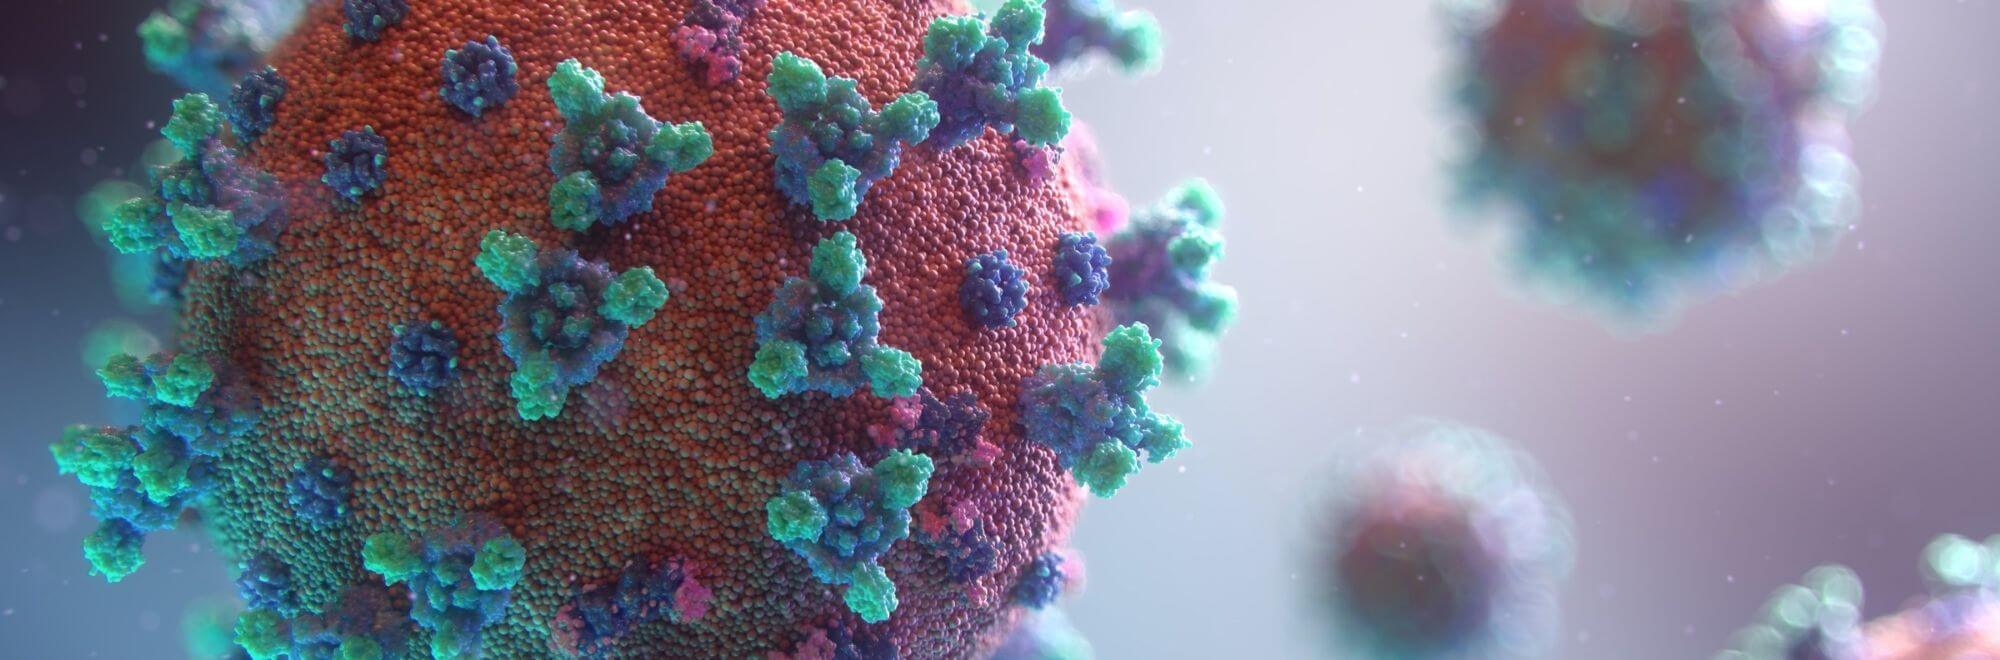 artist's rendering of the coronavirus